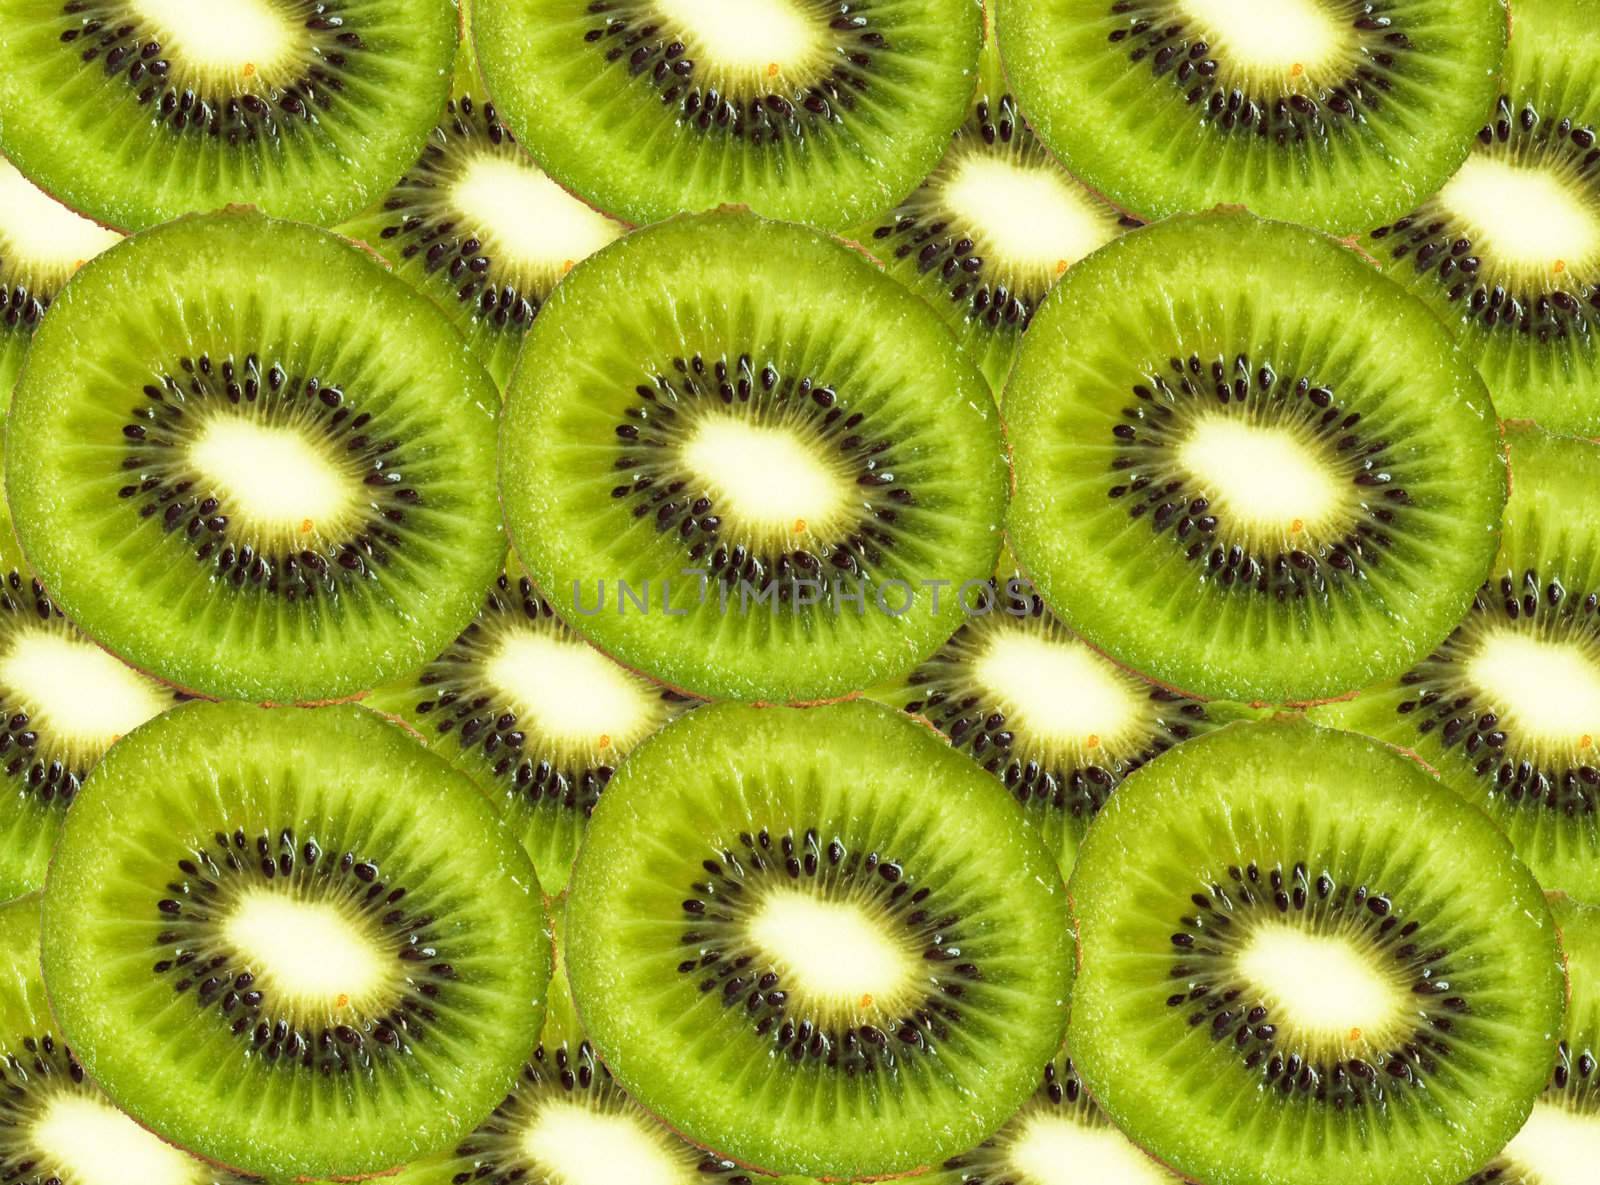 kiwi fruit slices  by schankz